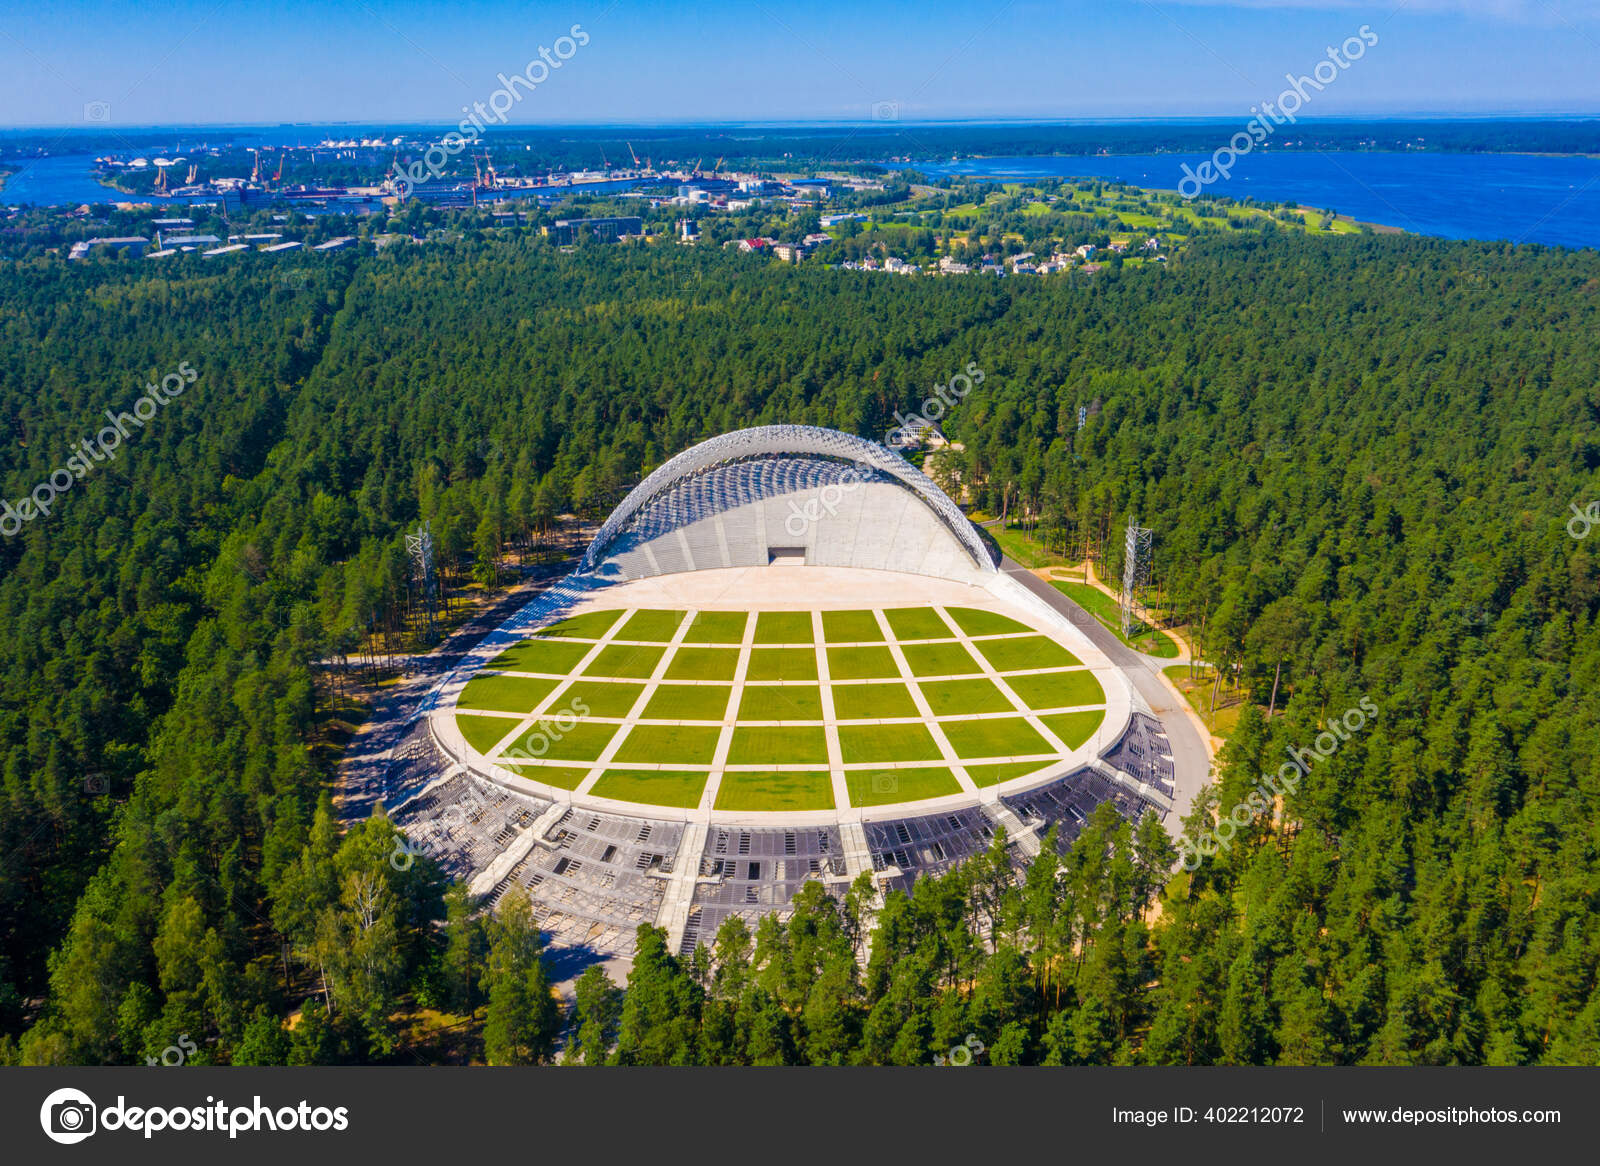 https://st4.depositphotos.com/6105212/40221/i/1600/depositphotos_402212072-stock-photo-aerial-view-great-bandstand-mezaparks.jpg